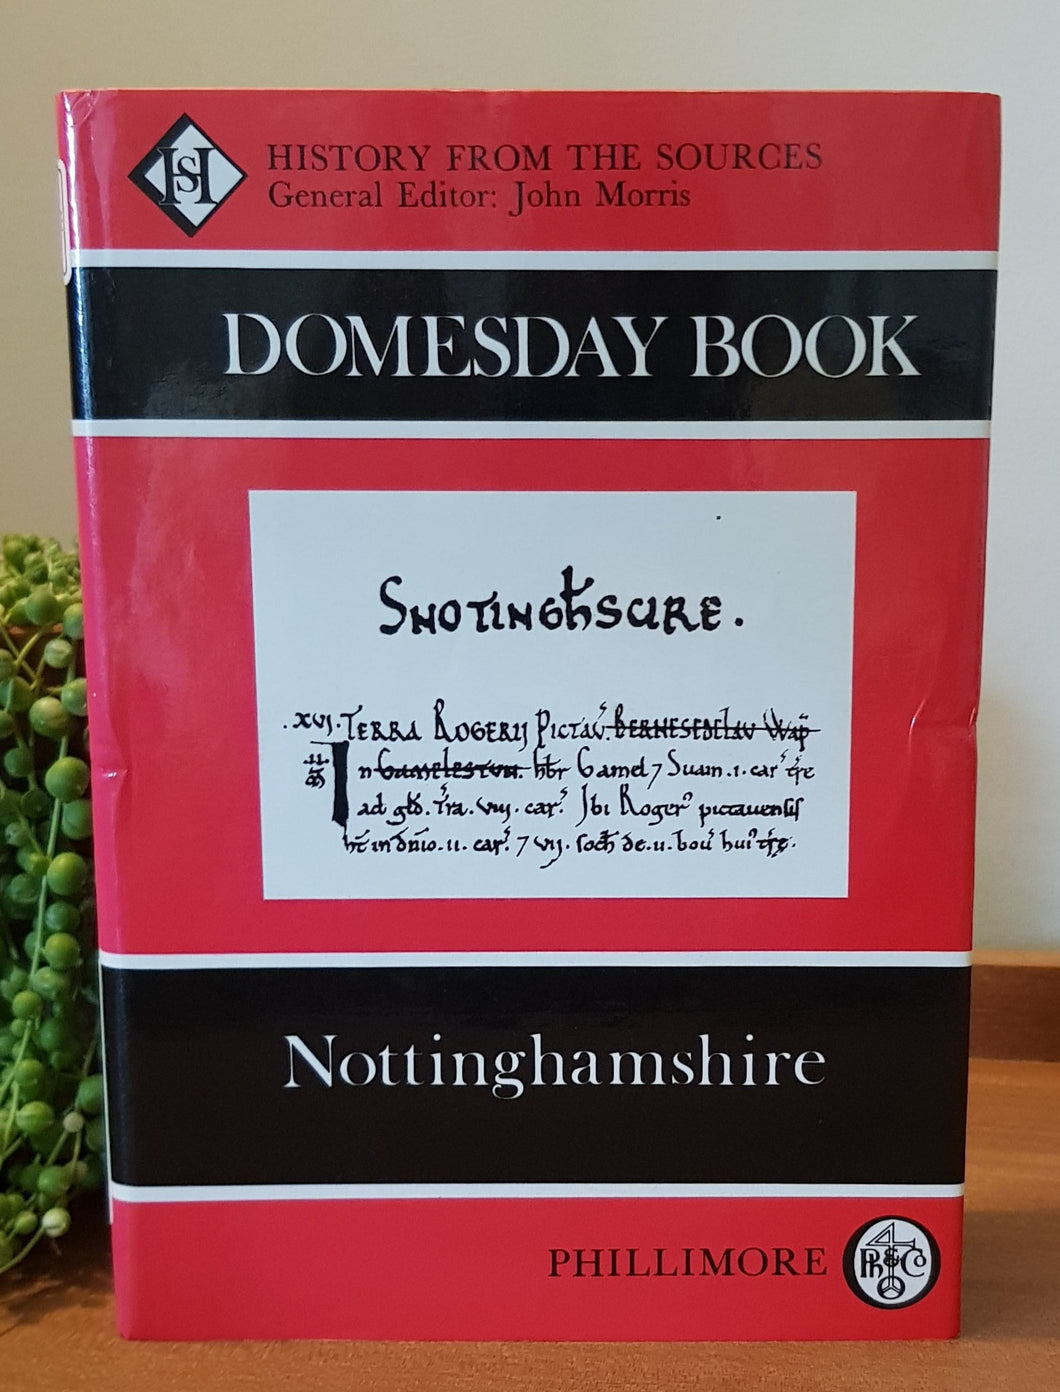 Domesday Book: Vol 28 Nottinghamshire by John Morris